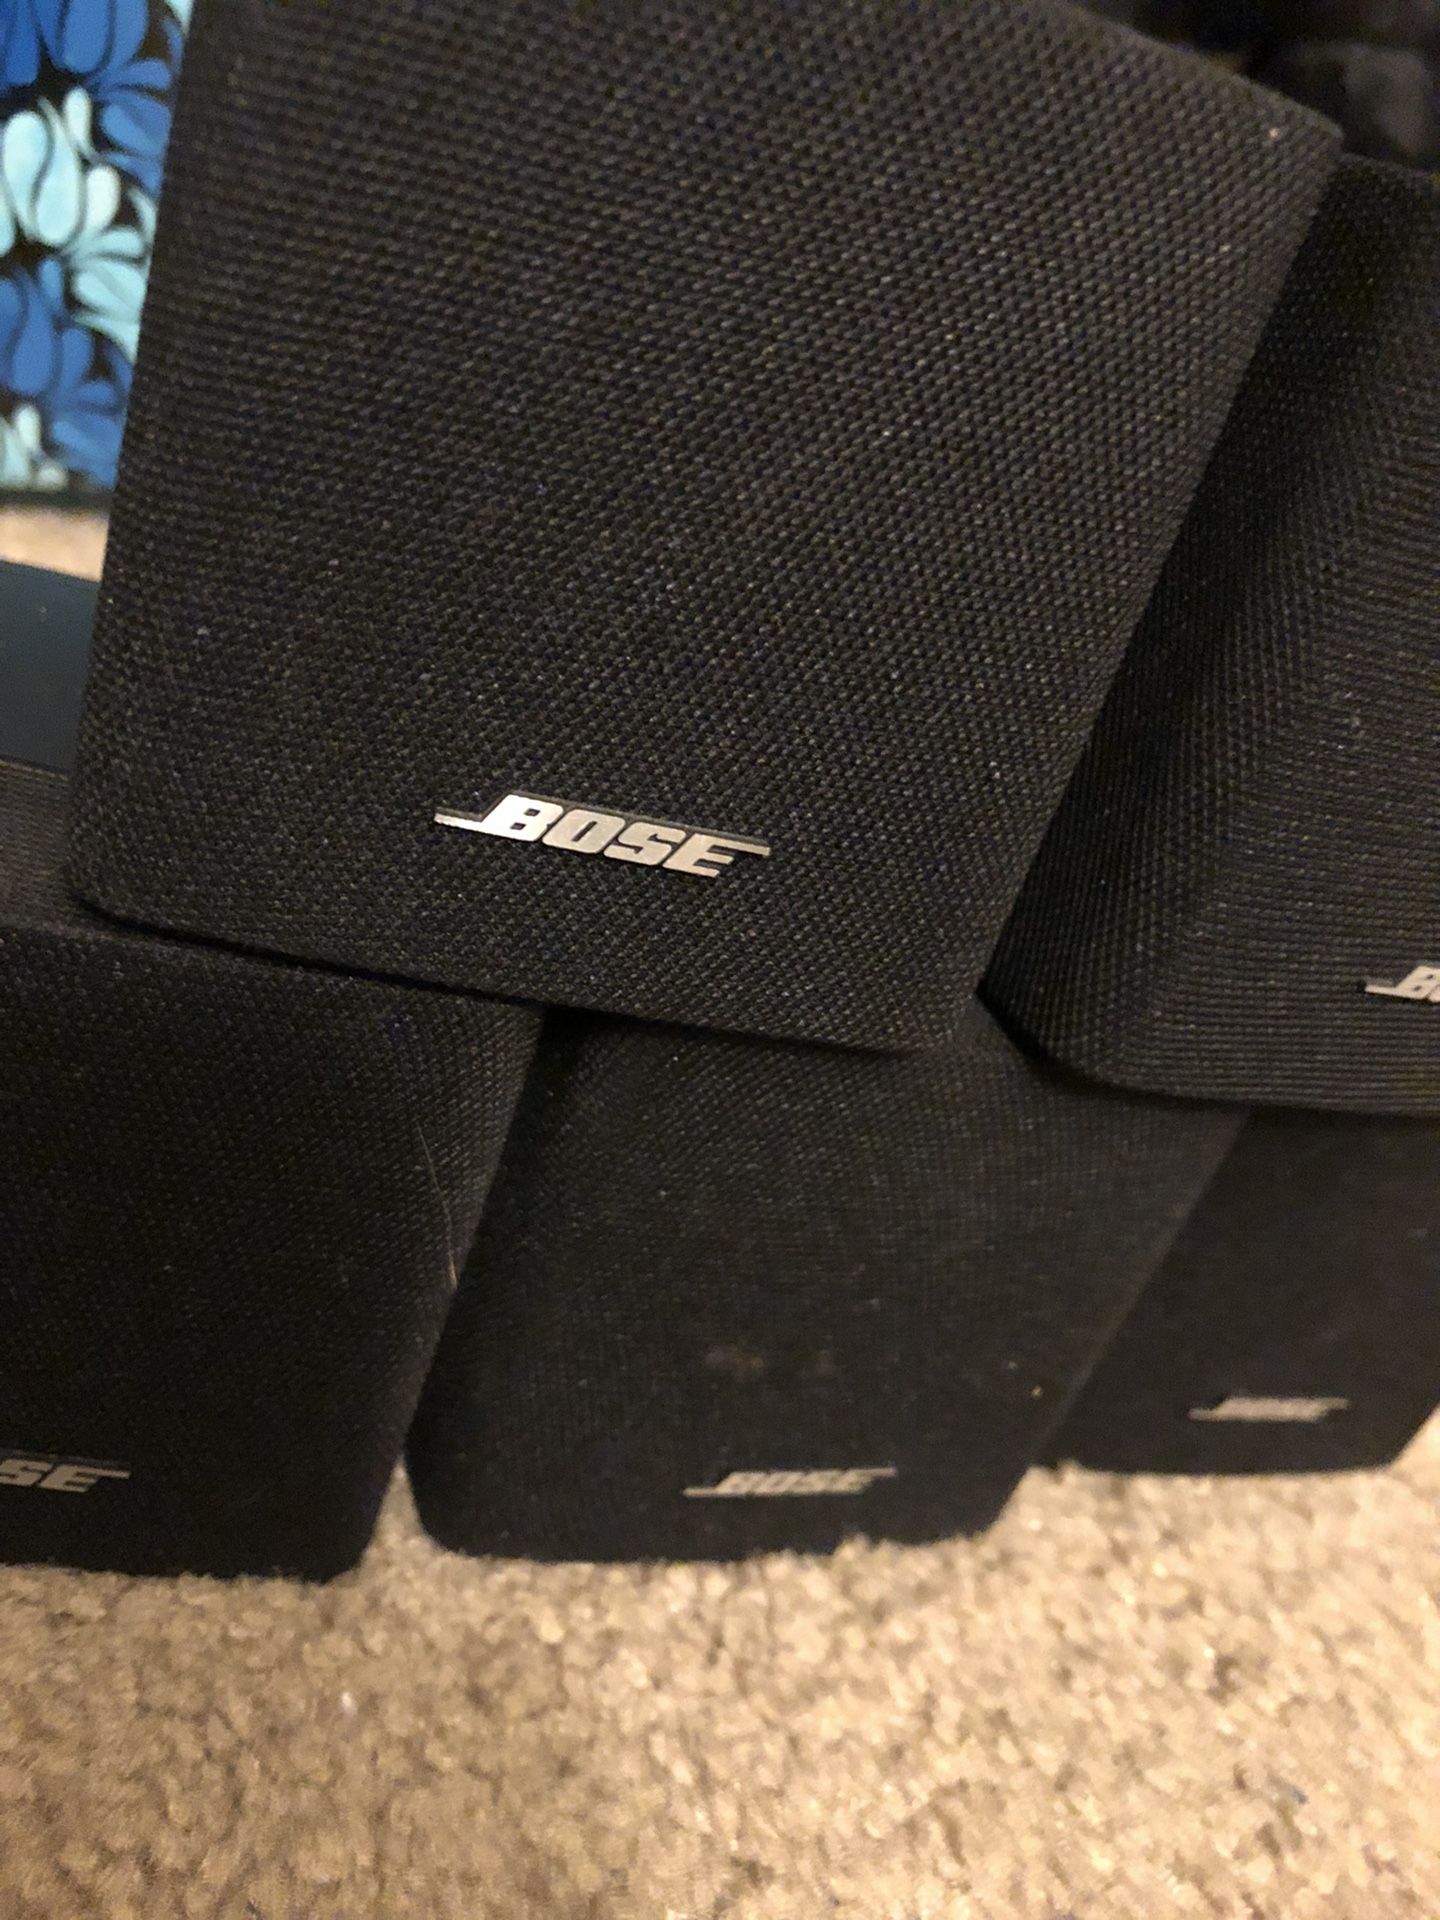 Bose Cube Speakers 